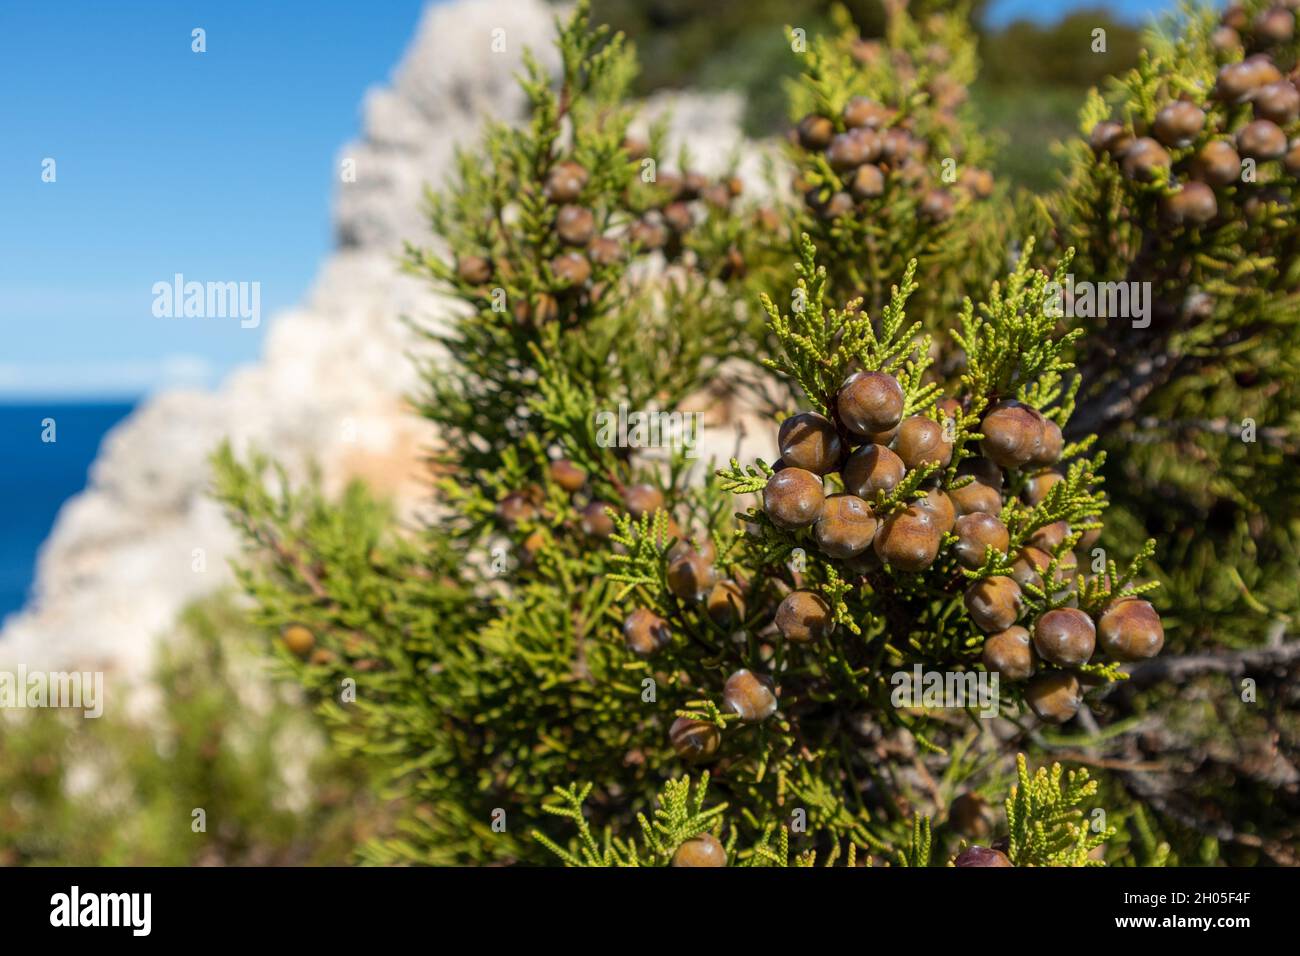 Green Juniperus bush with berries, the Greek juniper evergreen tree branch vibrant close-up with blurred rocky seascape background. Mediterranean sea, Stock Photo